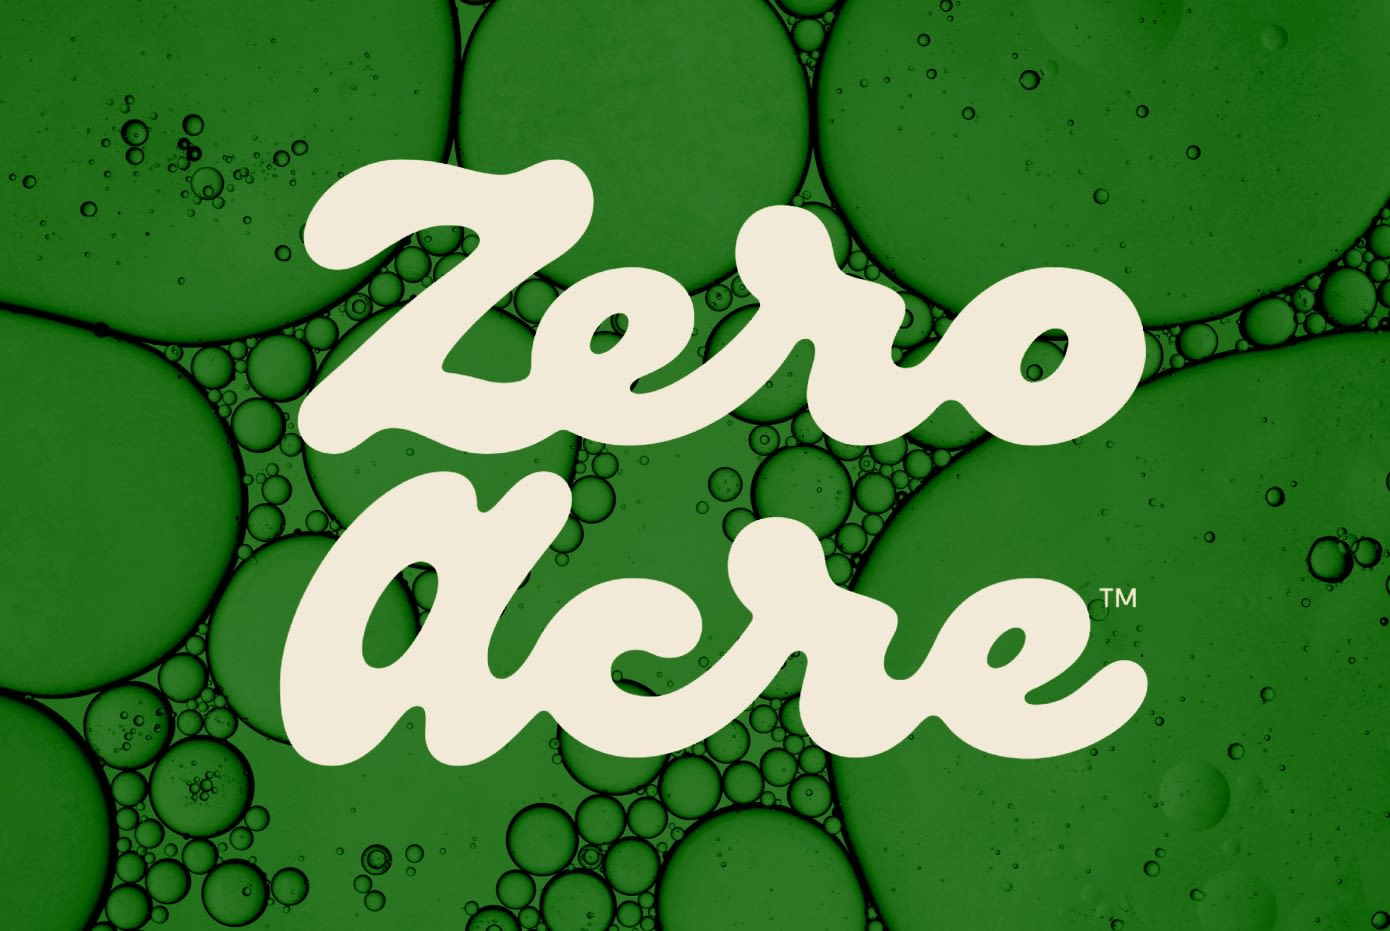 Zero Acre Farms' new era of healthy oils and fats | Virgin